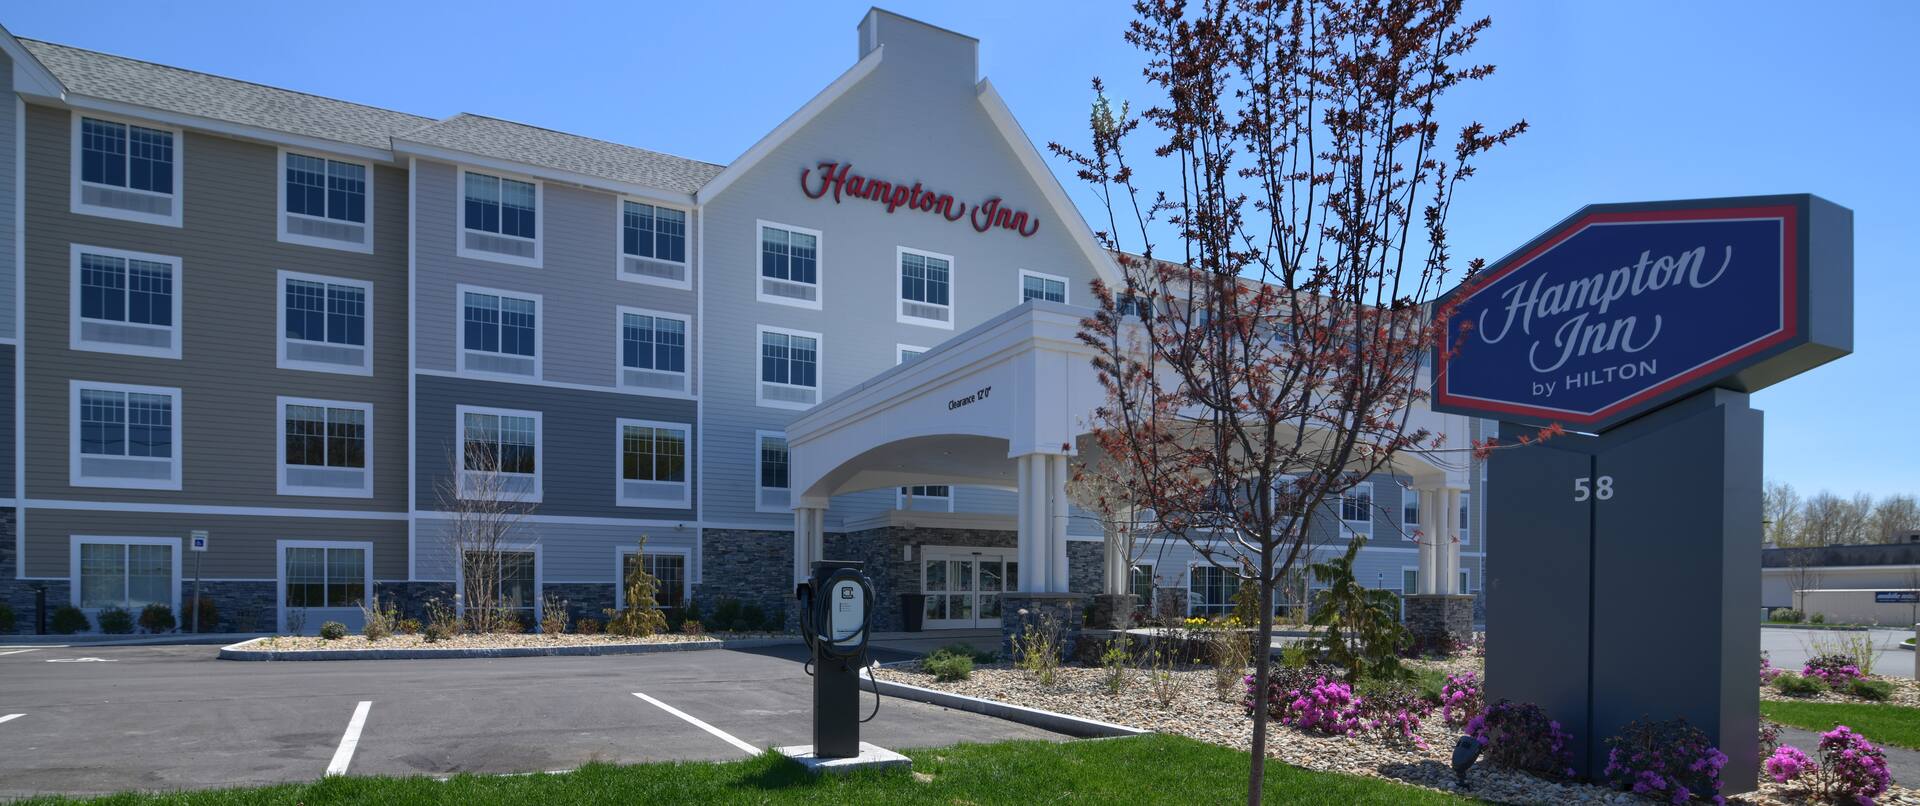 Hampton Inn Hotel Exterior with Sign